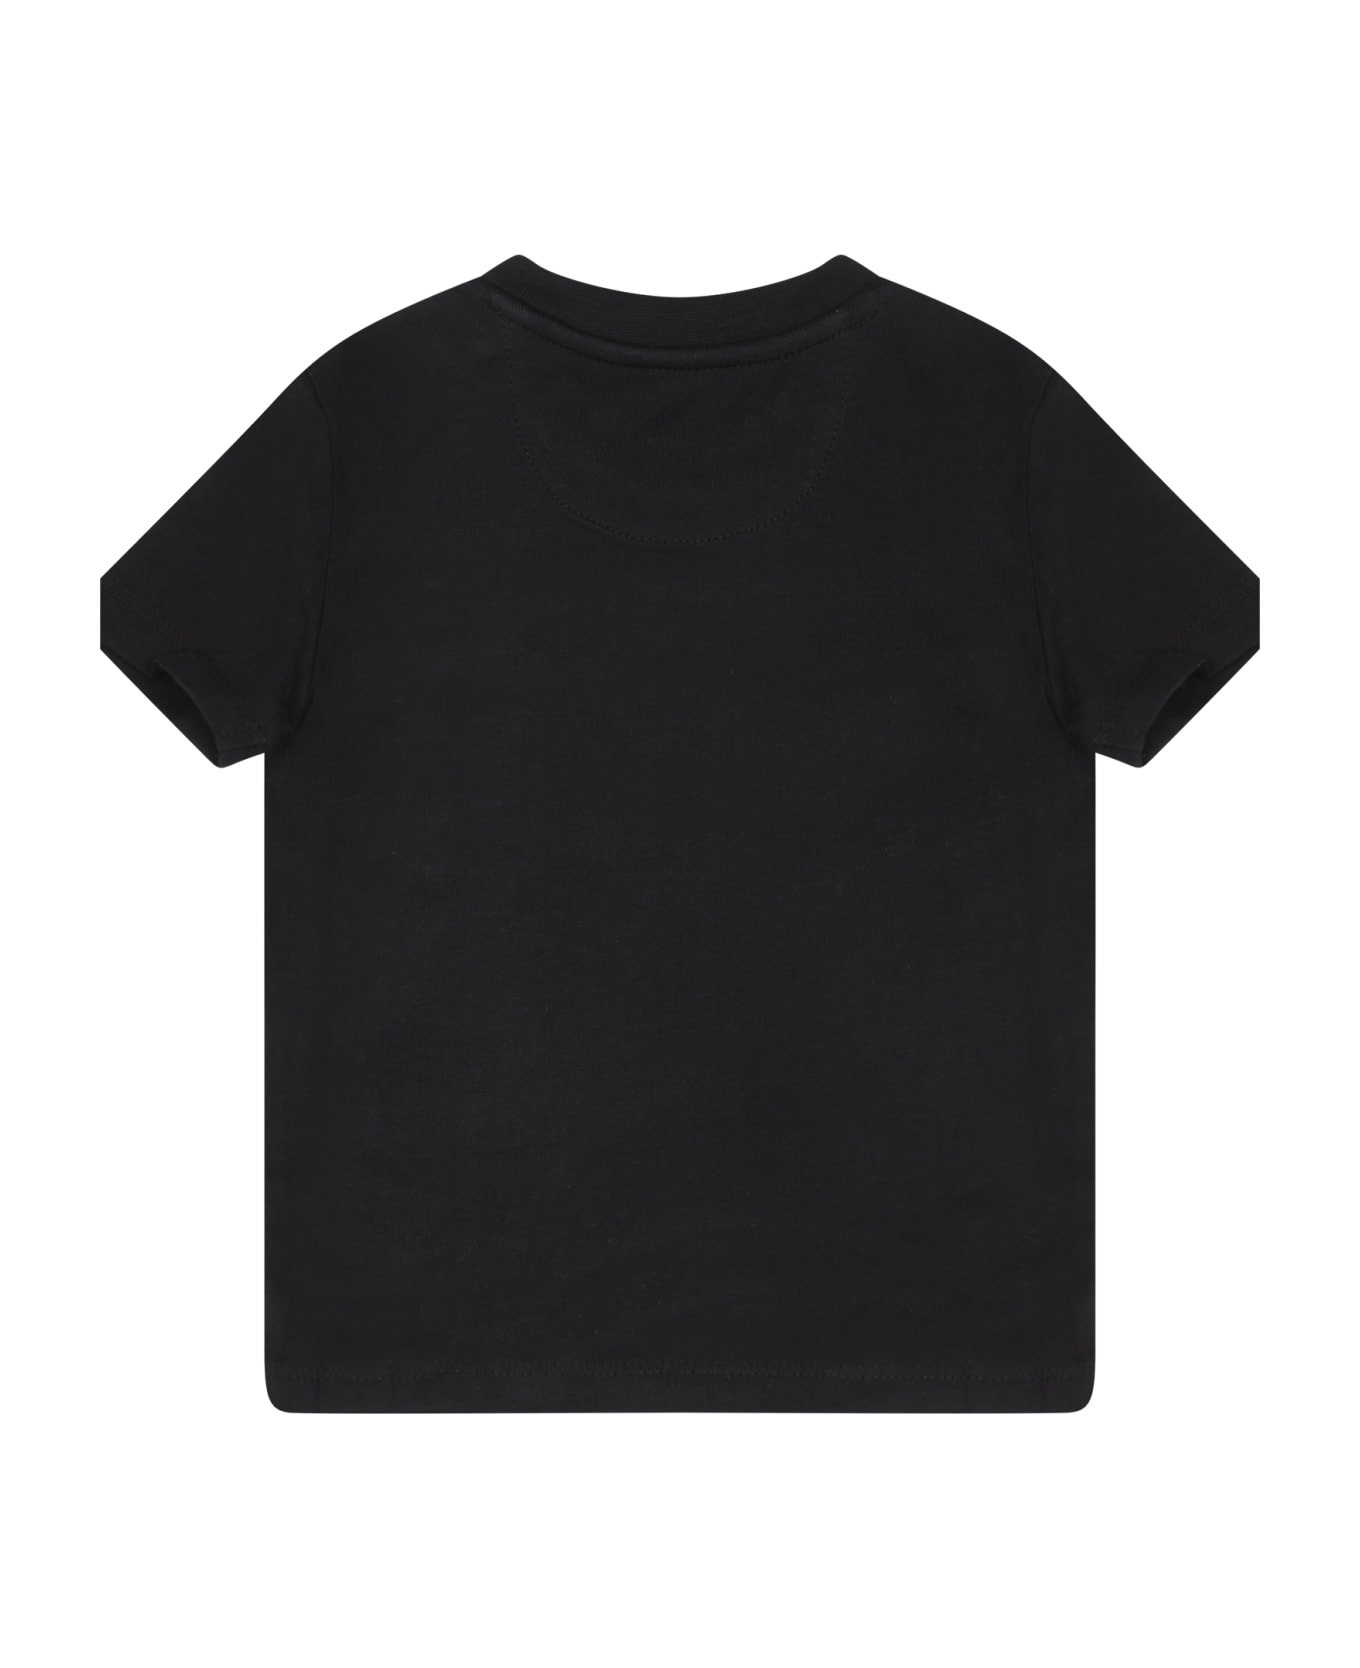 Calvin Klein Black T-shirt For Baby Boy With Logo - Black